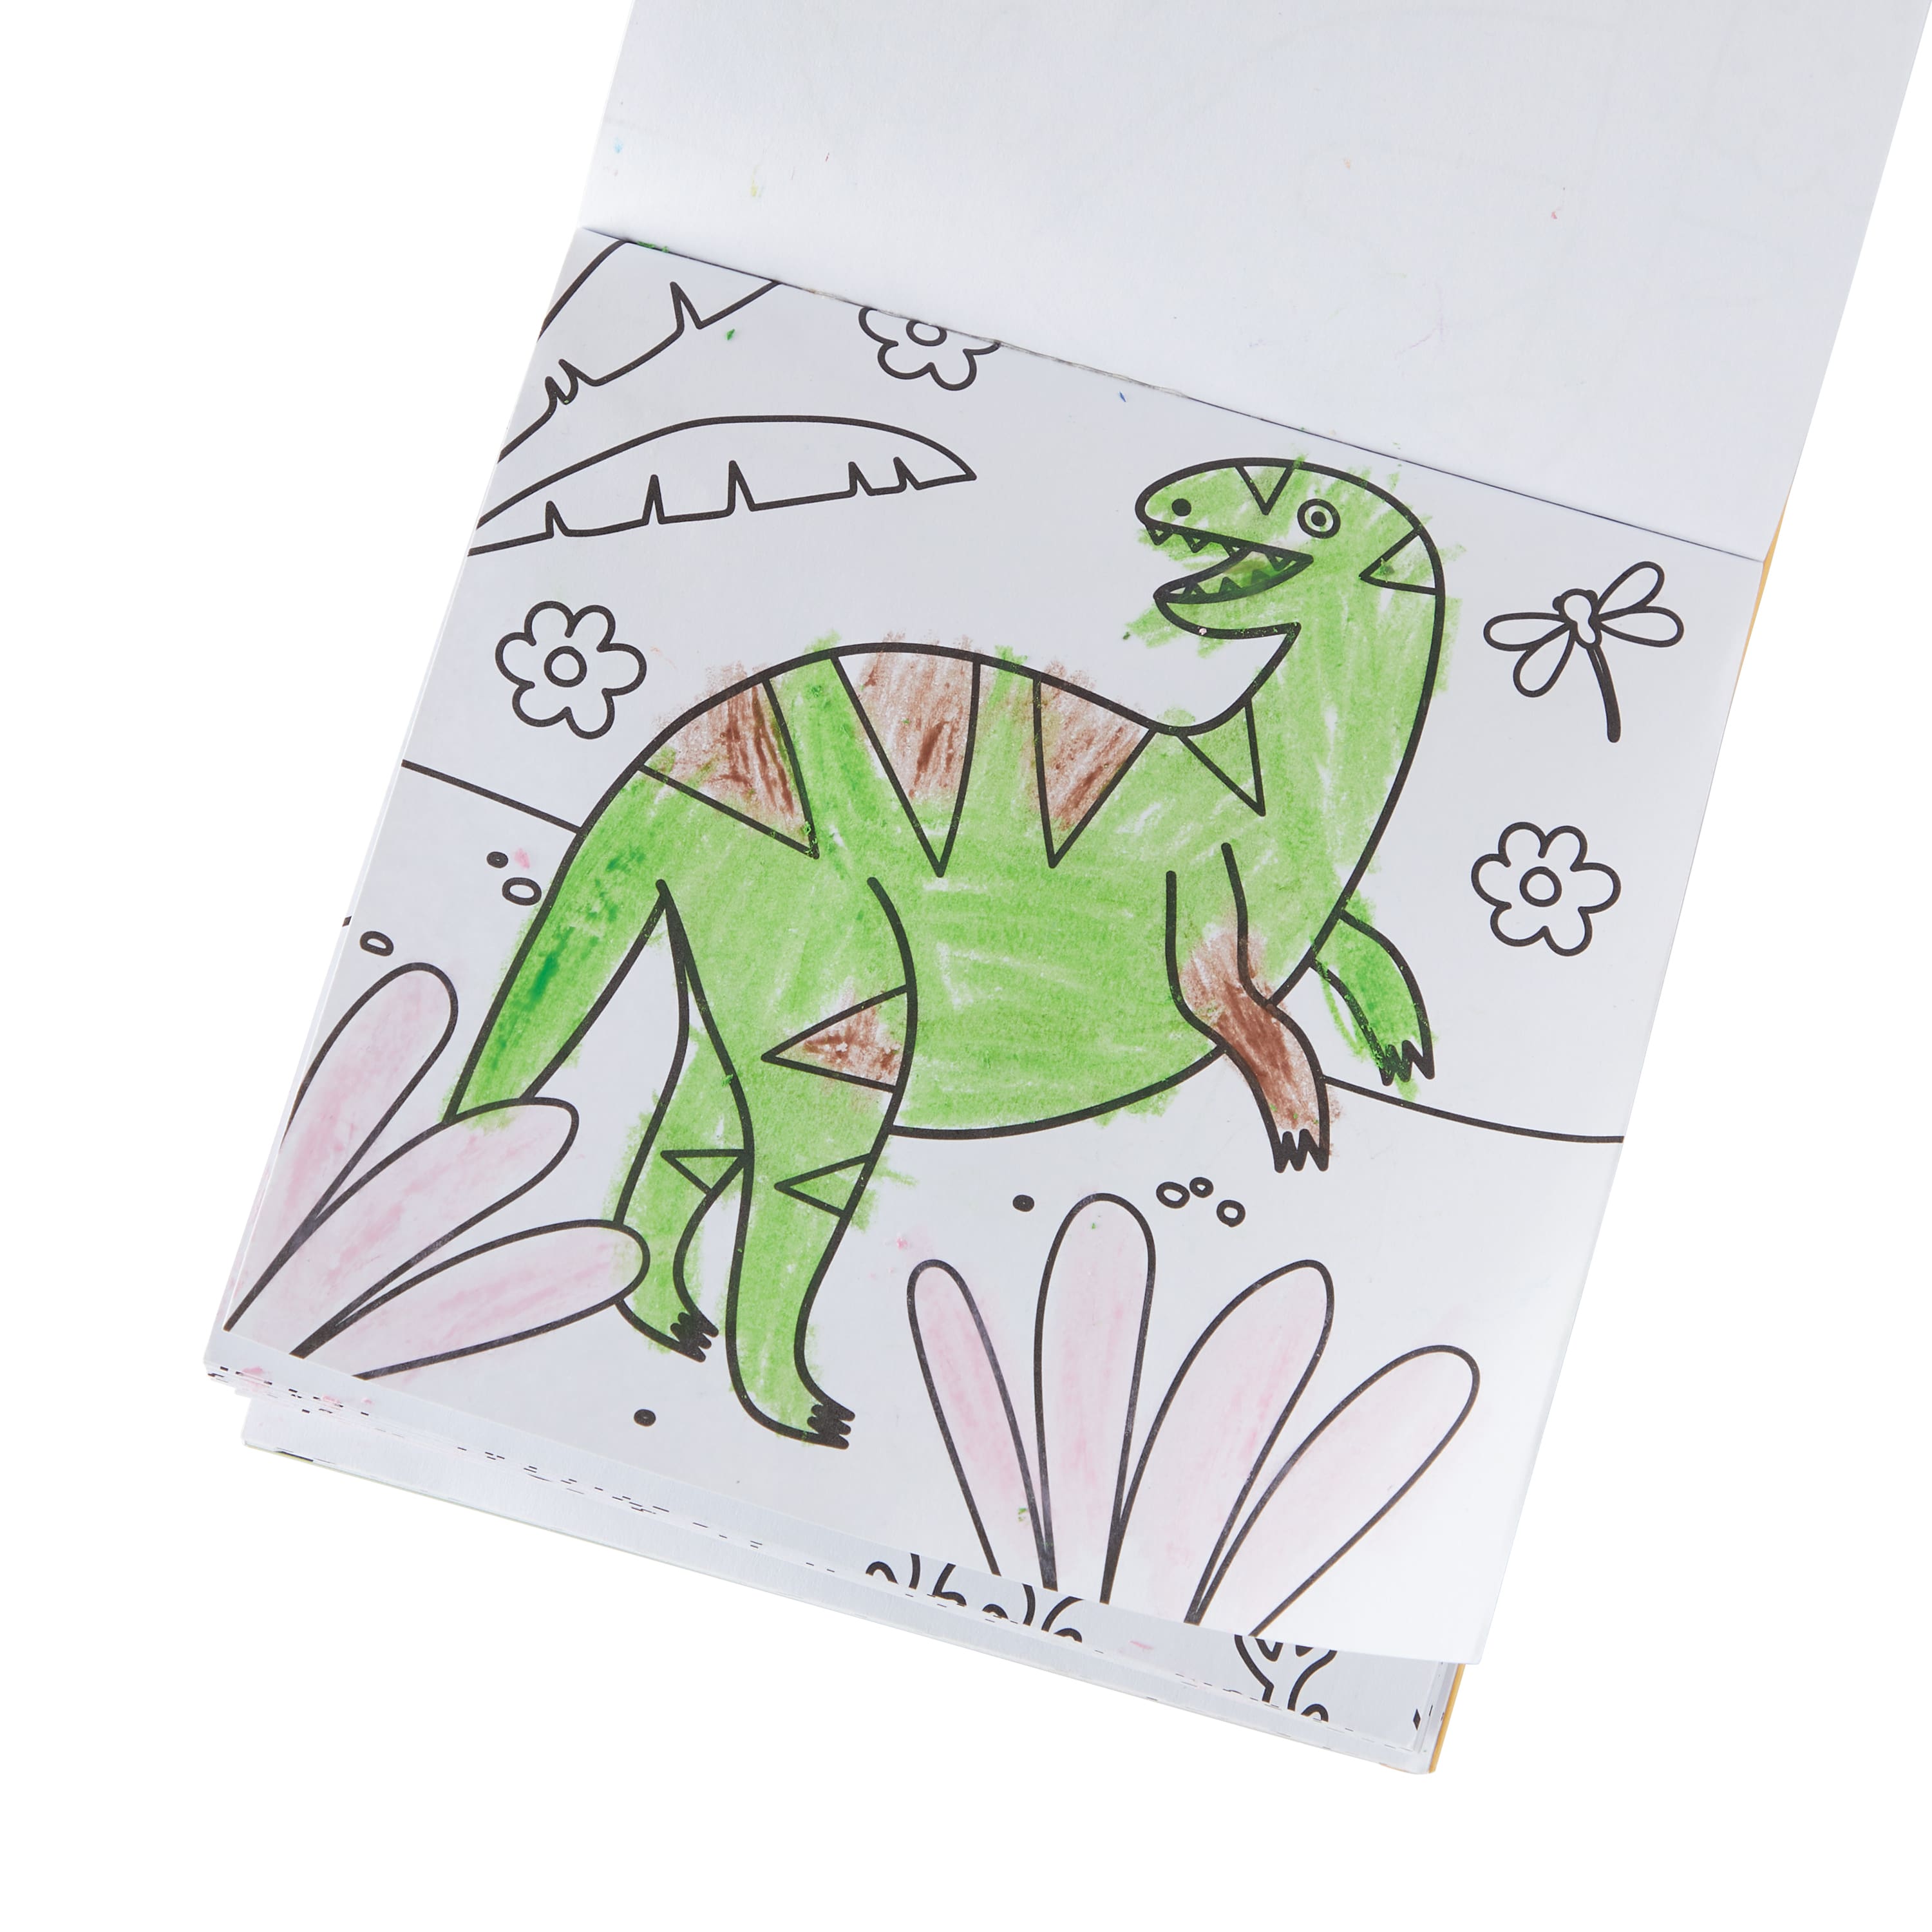 OOLY Dinoland Carry Along Crayon &#x26; Coloring Book Kit, 10ct.